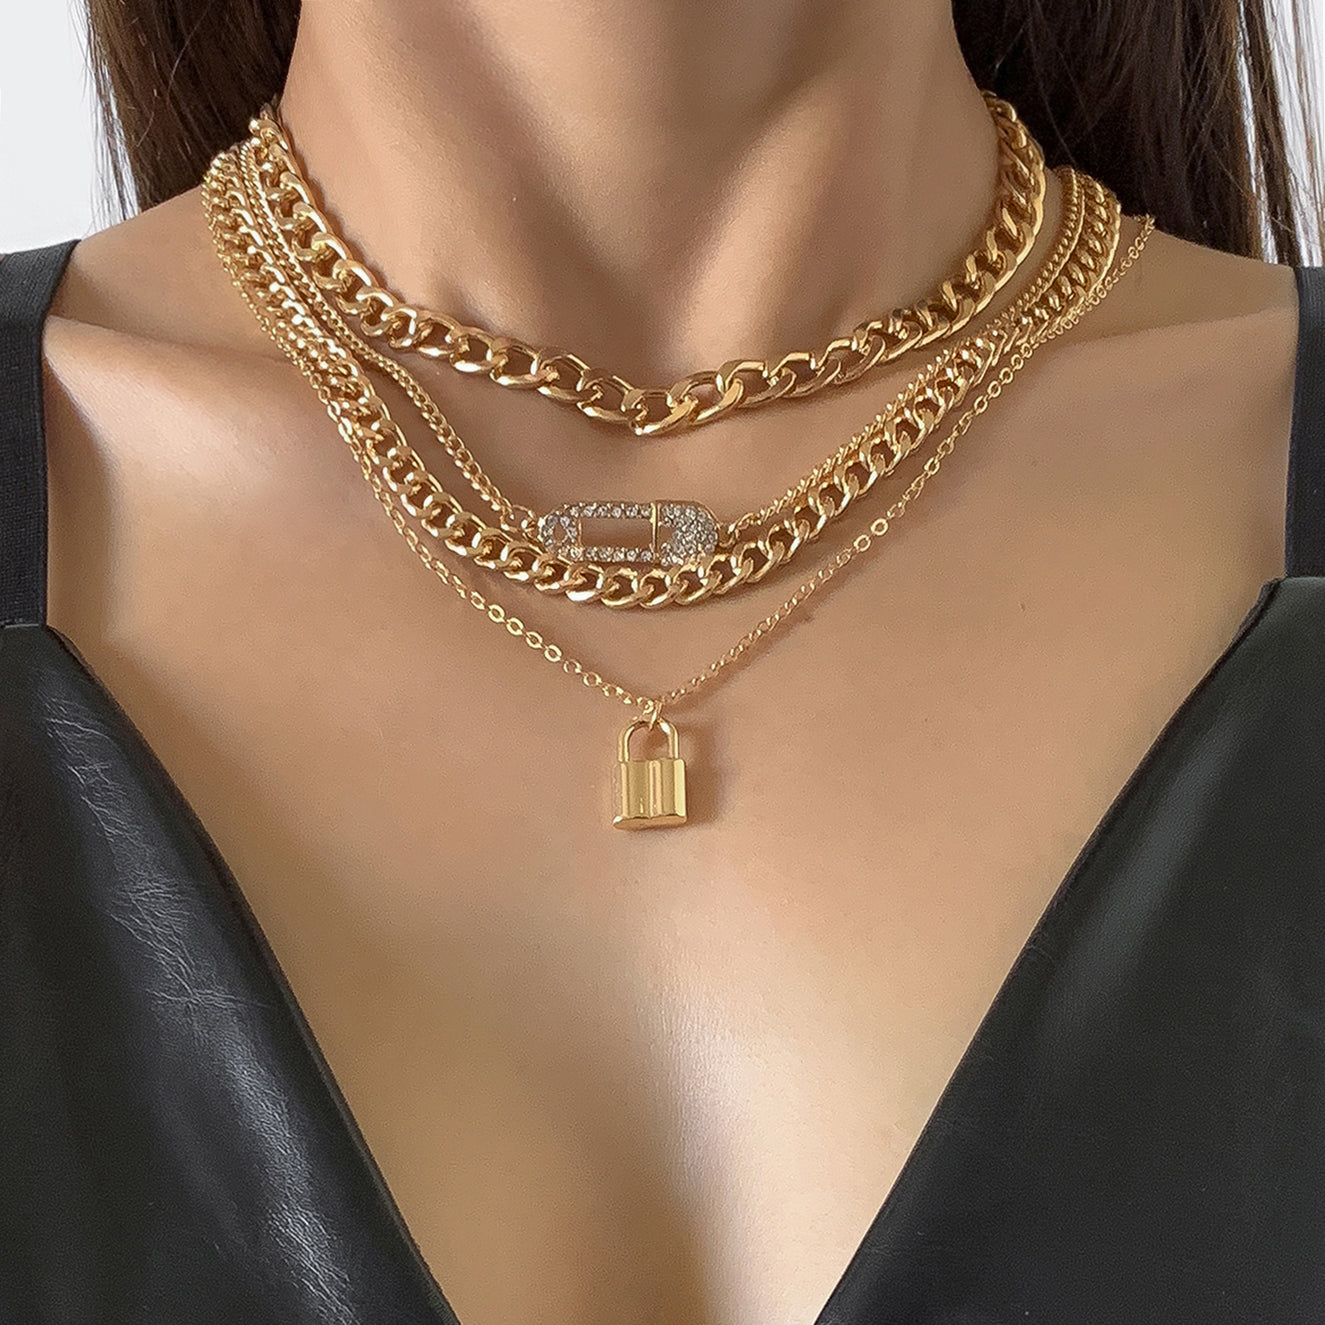 4pcs Women's Chain Necklace Set Pin And LockChoker For Women Unisex Necklace